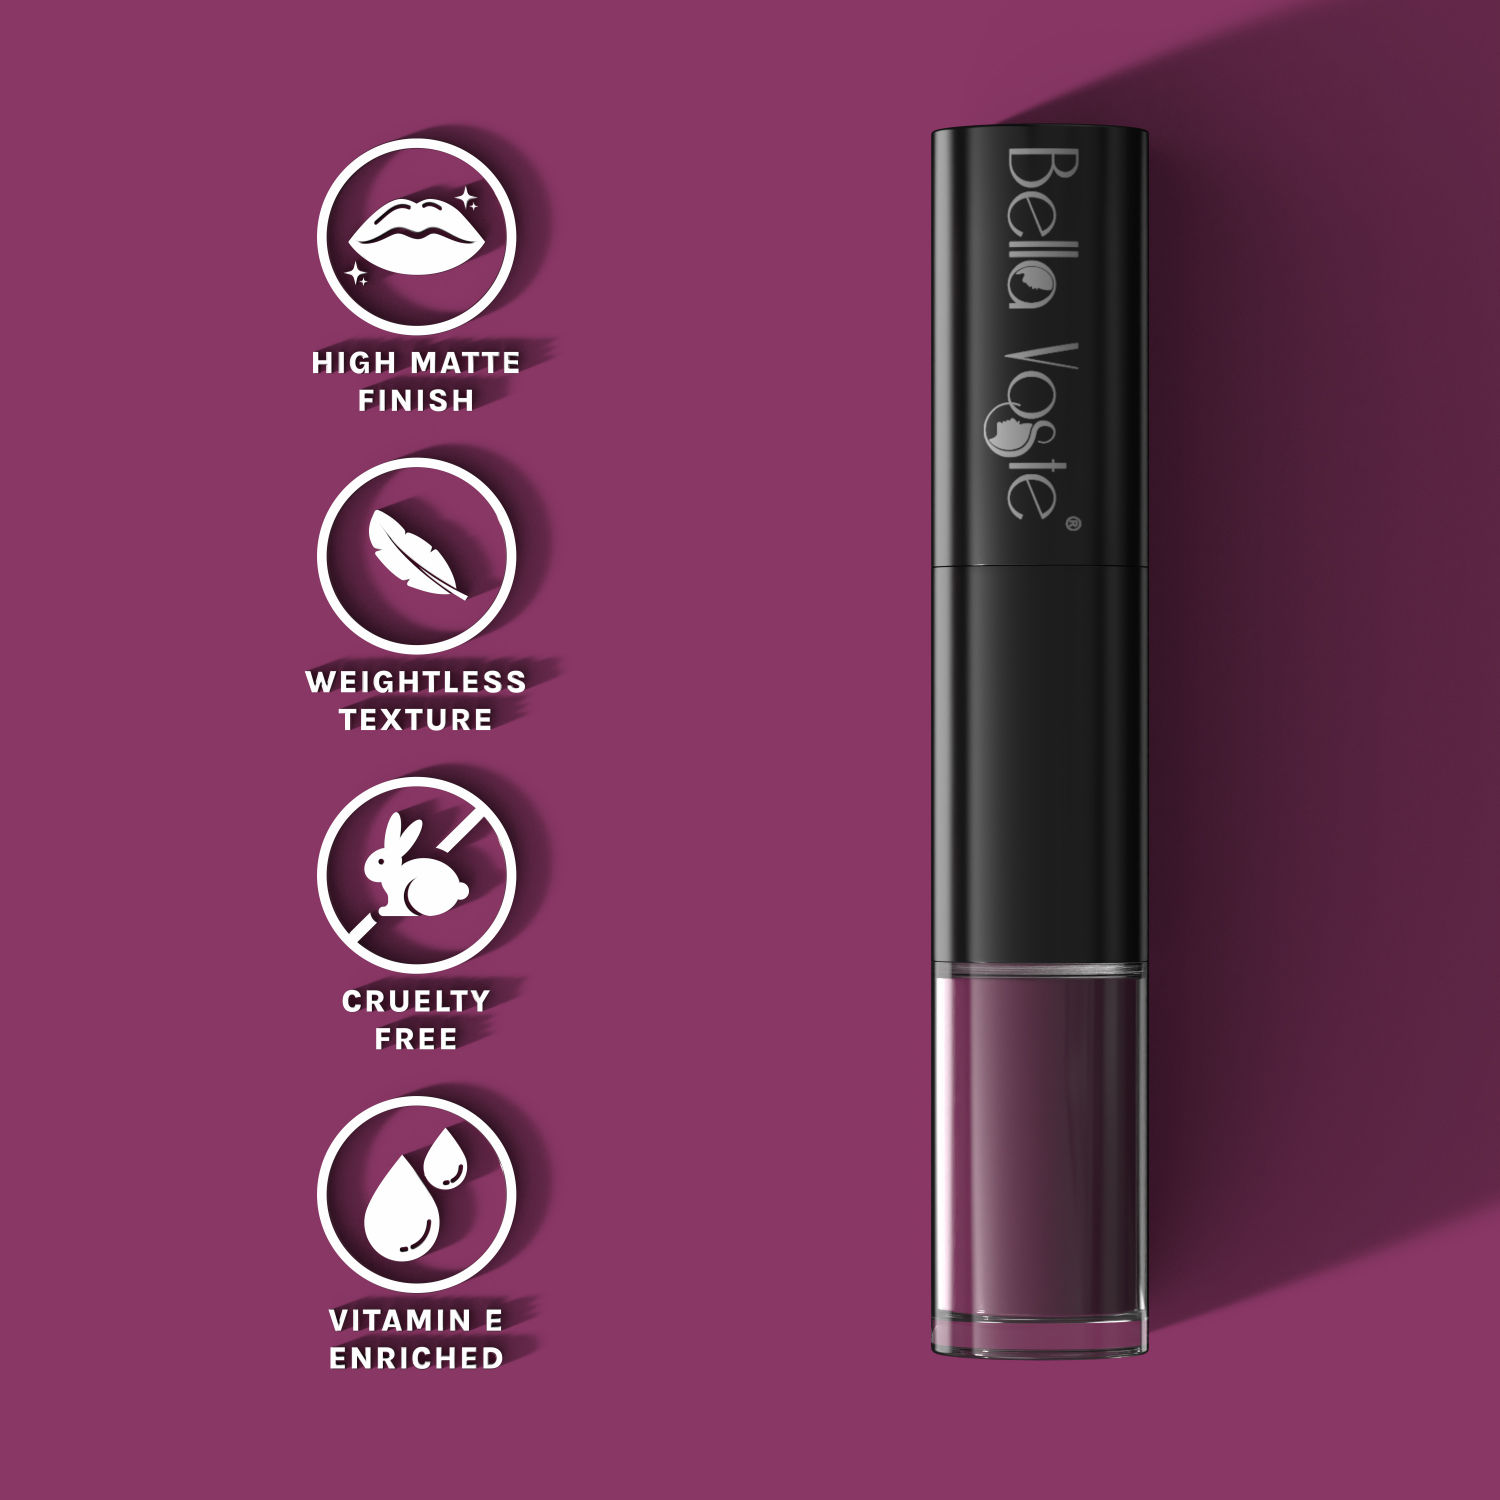 Buy Bella Voste Prime & Pout Liquid Lipstick , Dream Alert (02) (1.1 g) & (1.6 ml) - Purplle